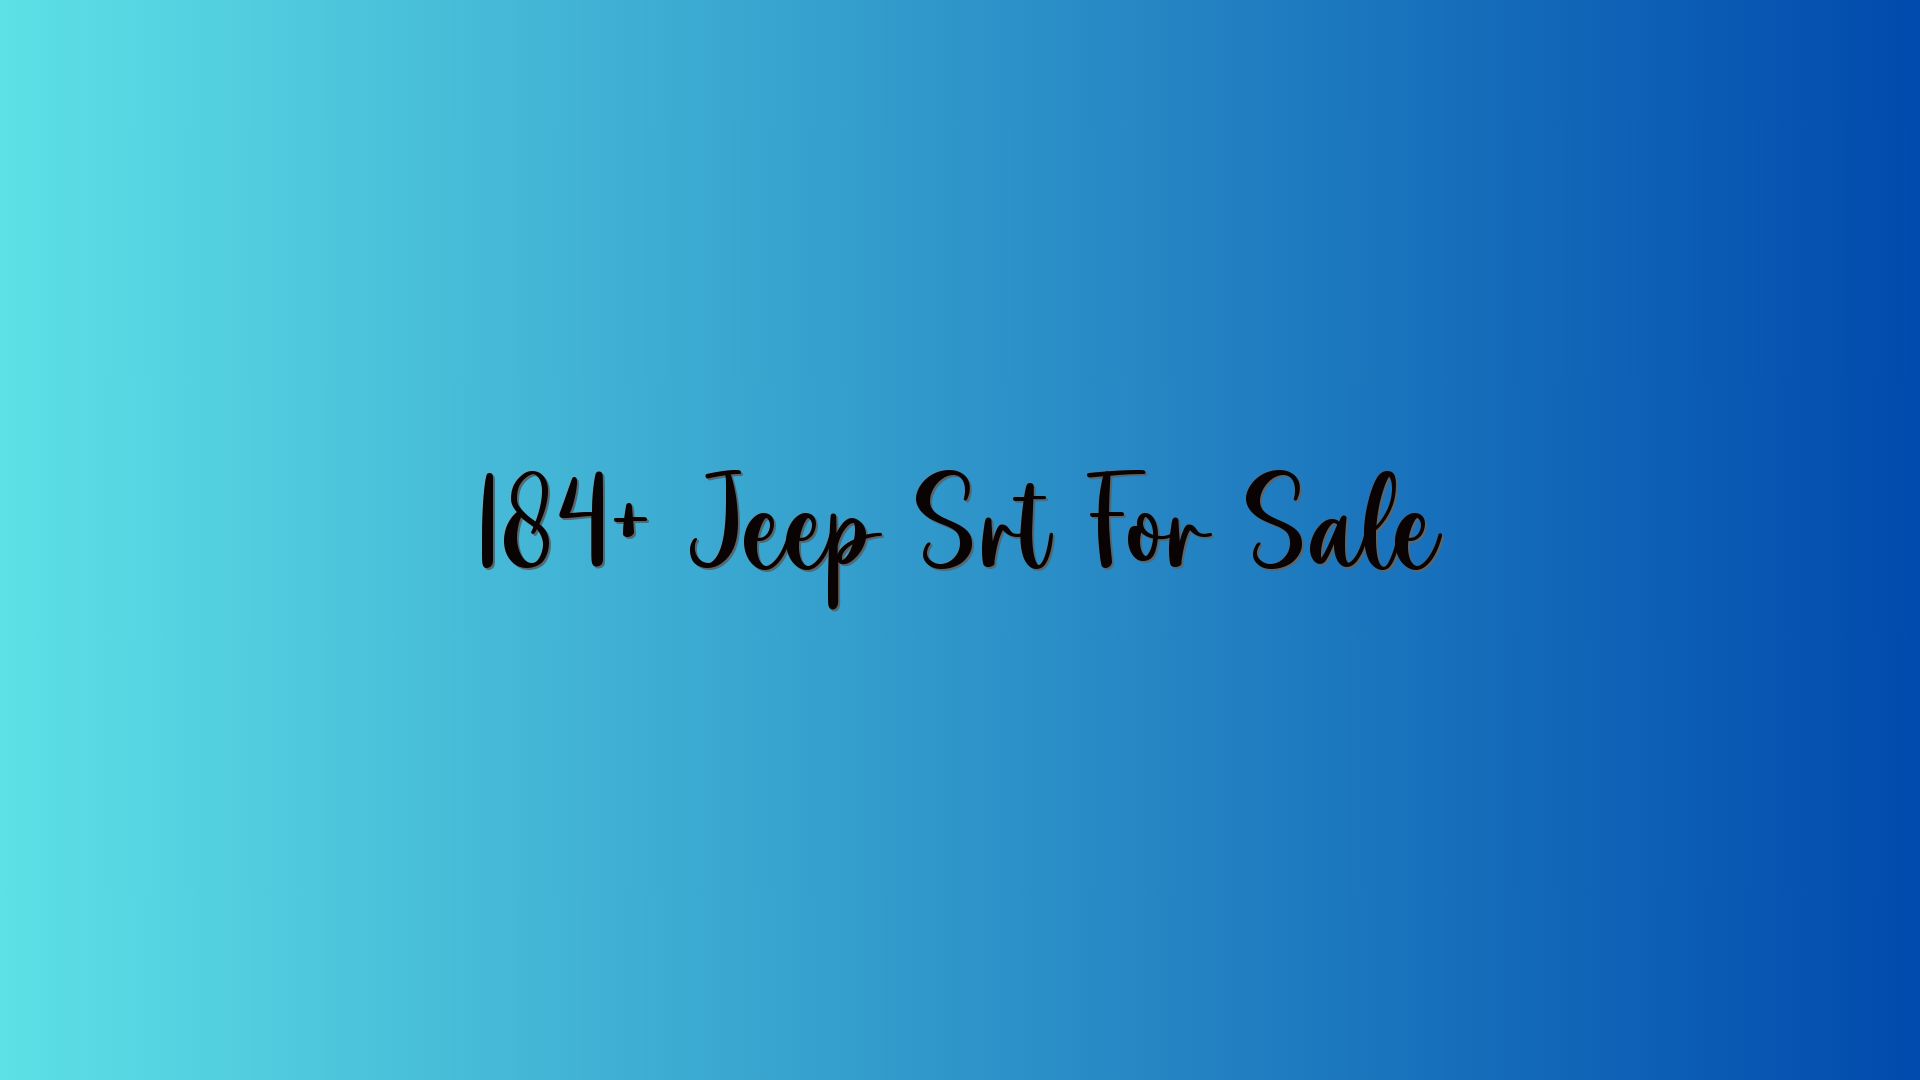 184+ Jeep Srt For Sale